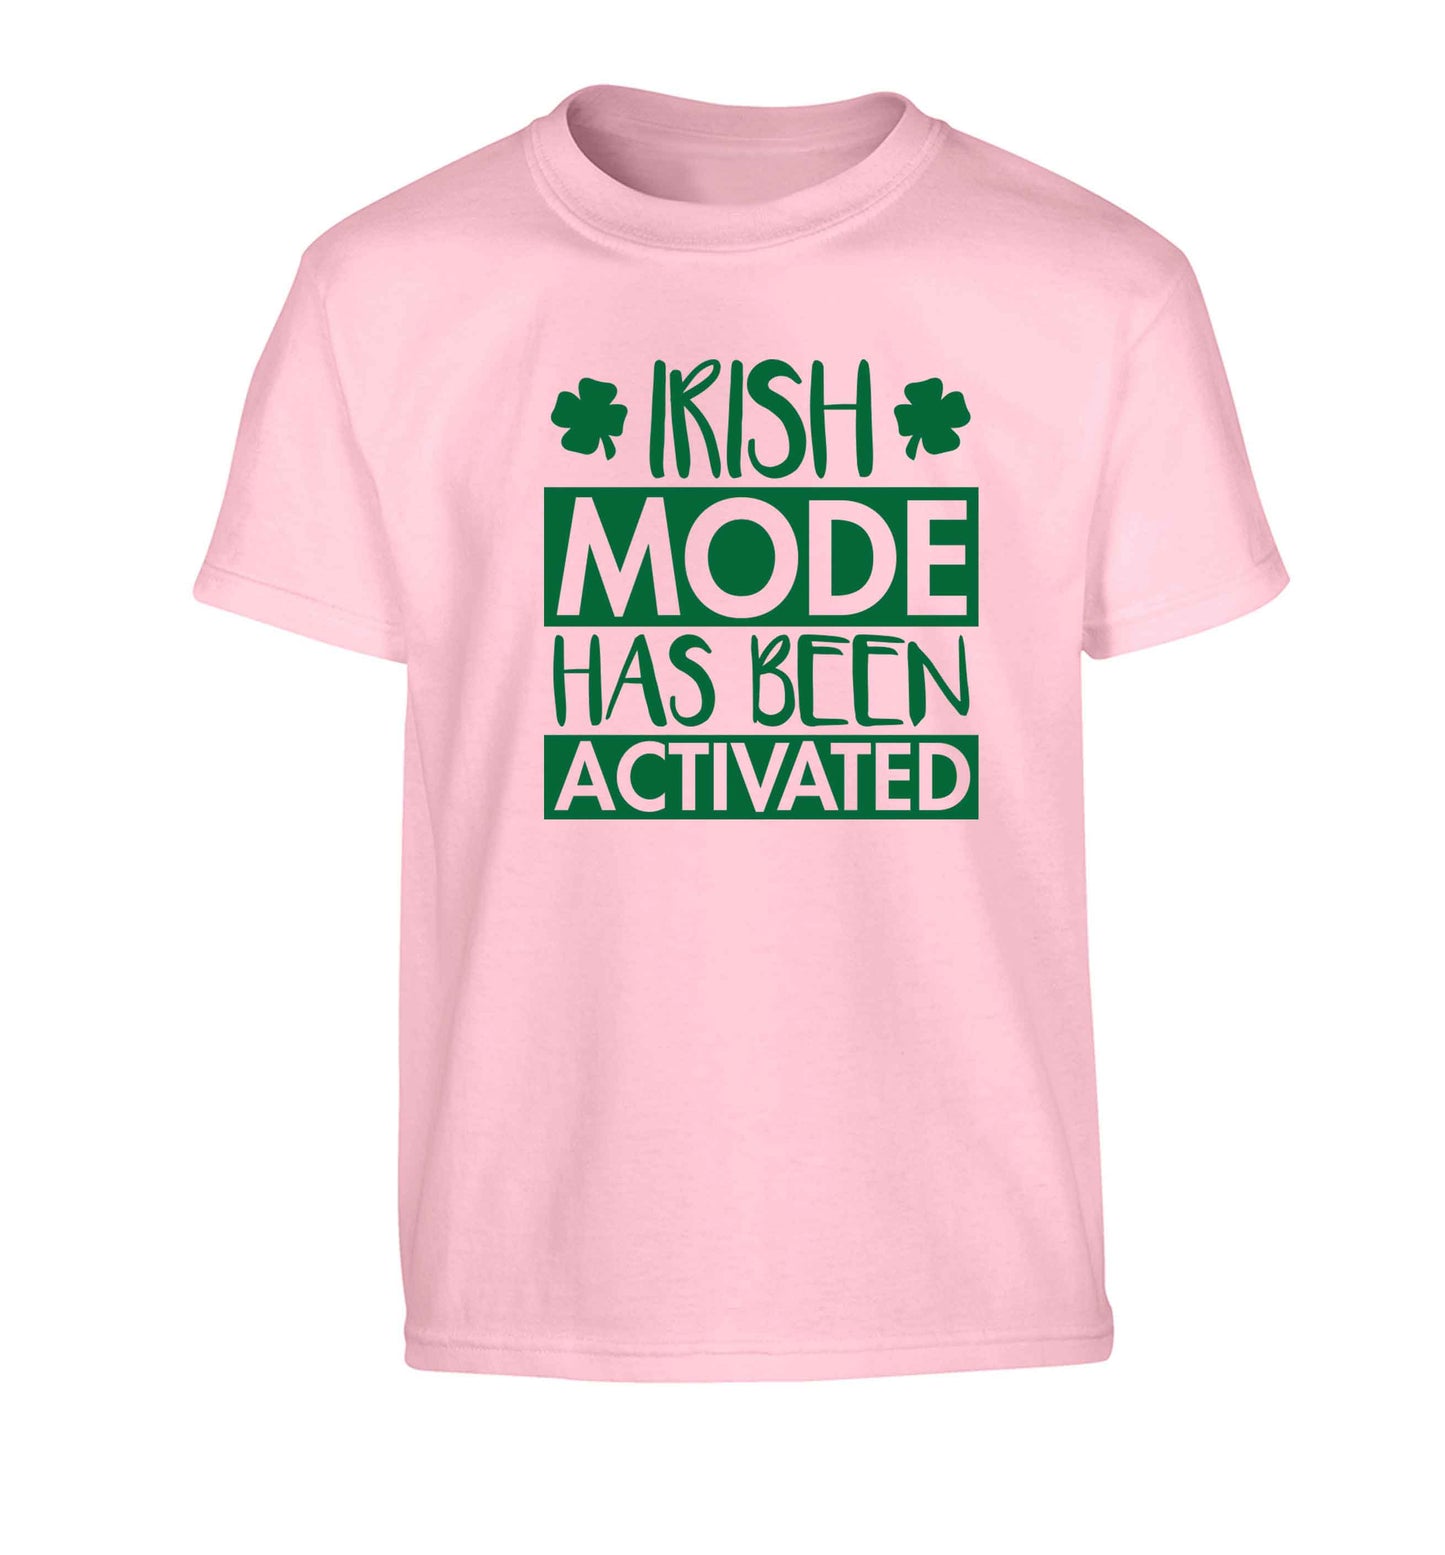 Irish mode has been activated Children's light pink Tshirt 12-13 Years